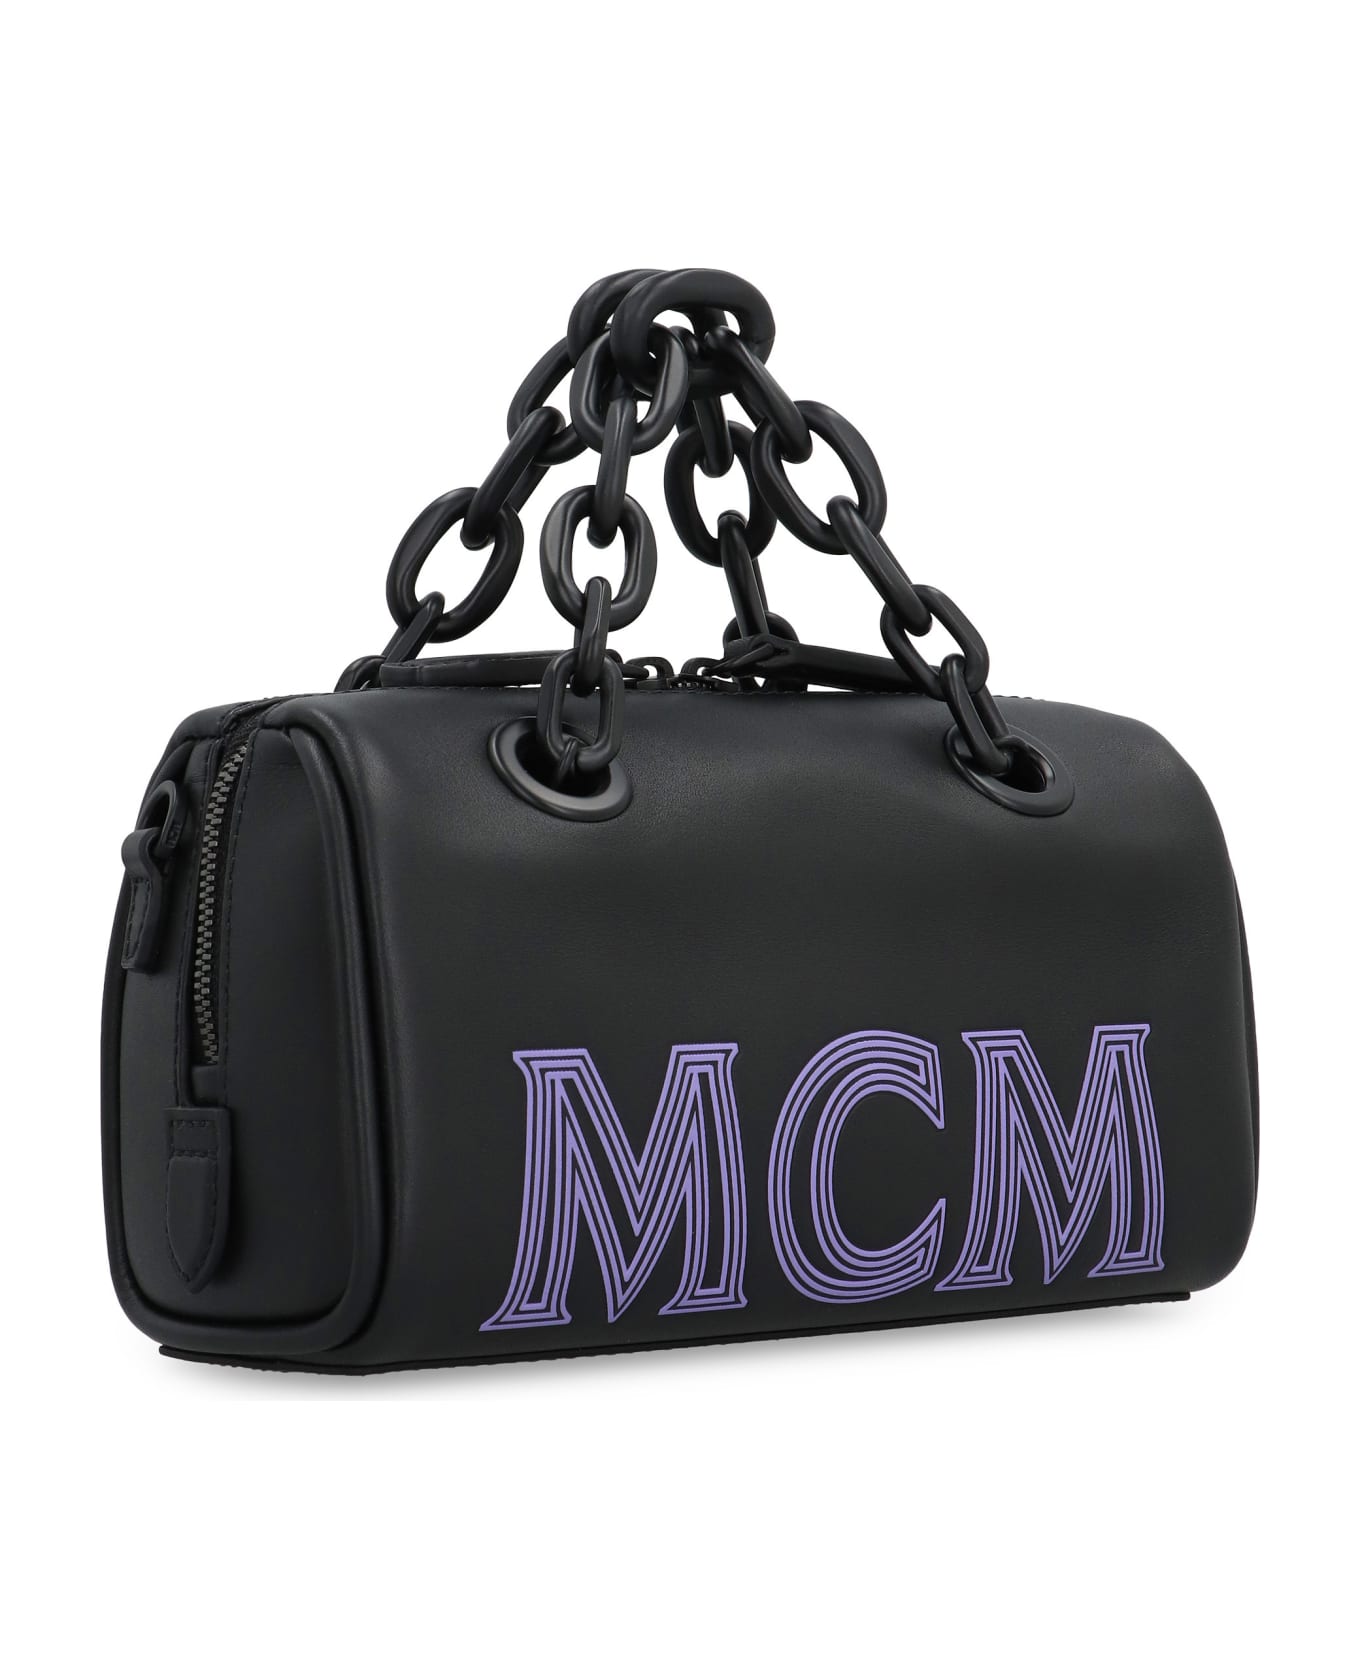 MCM Leather Mini Handbag - black トラベルバッグ